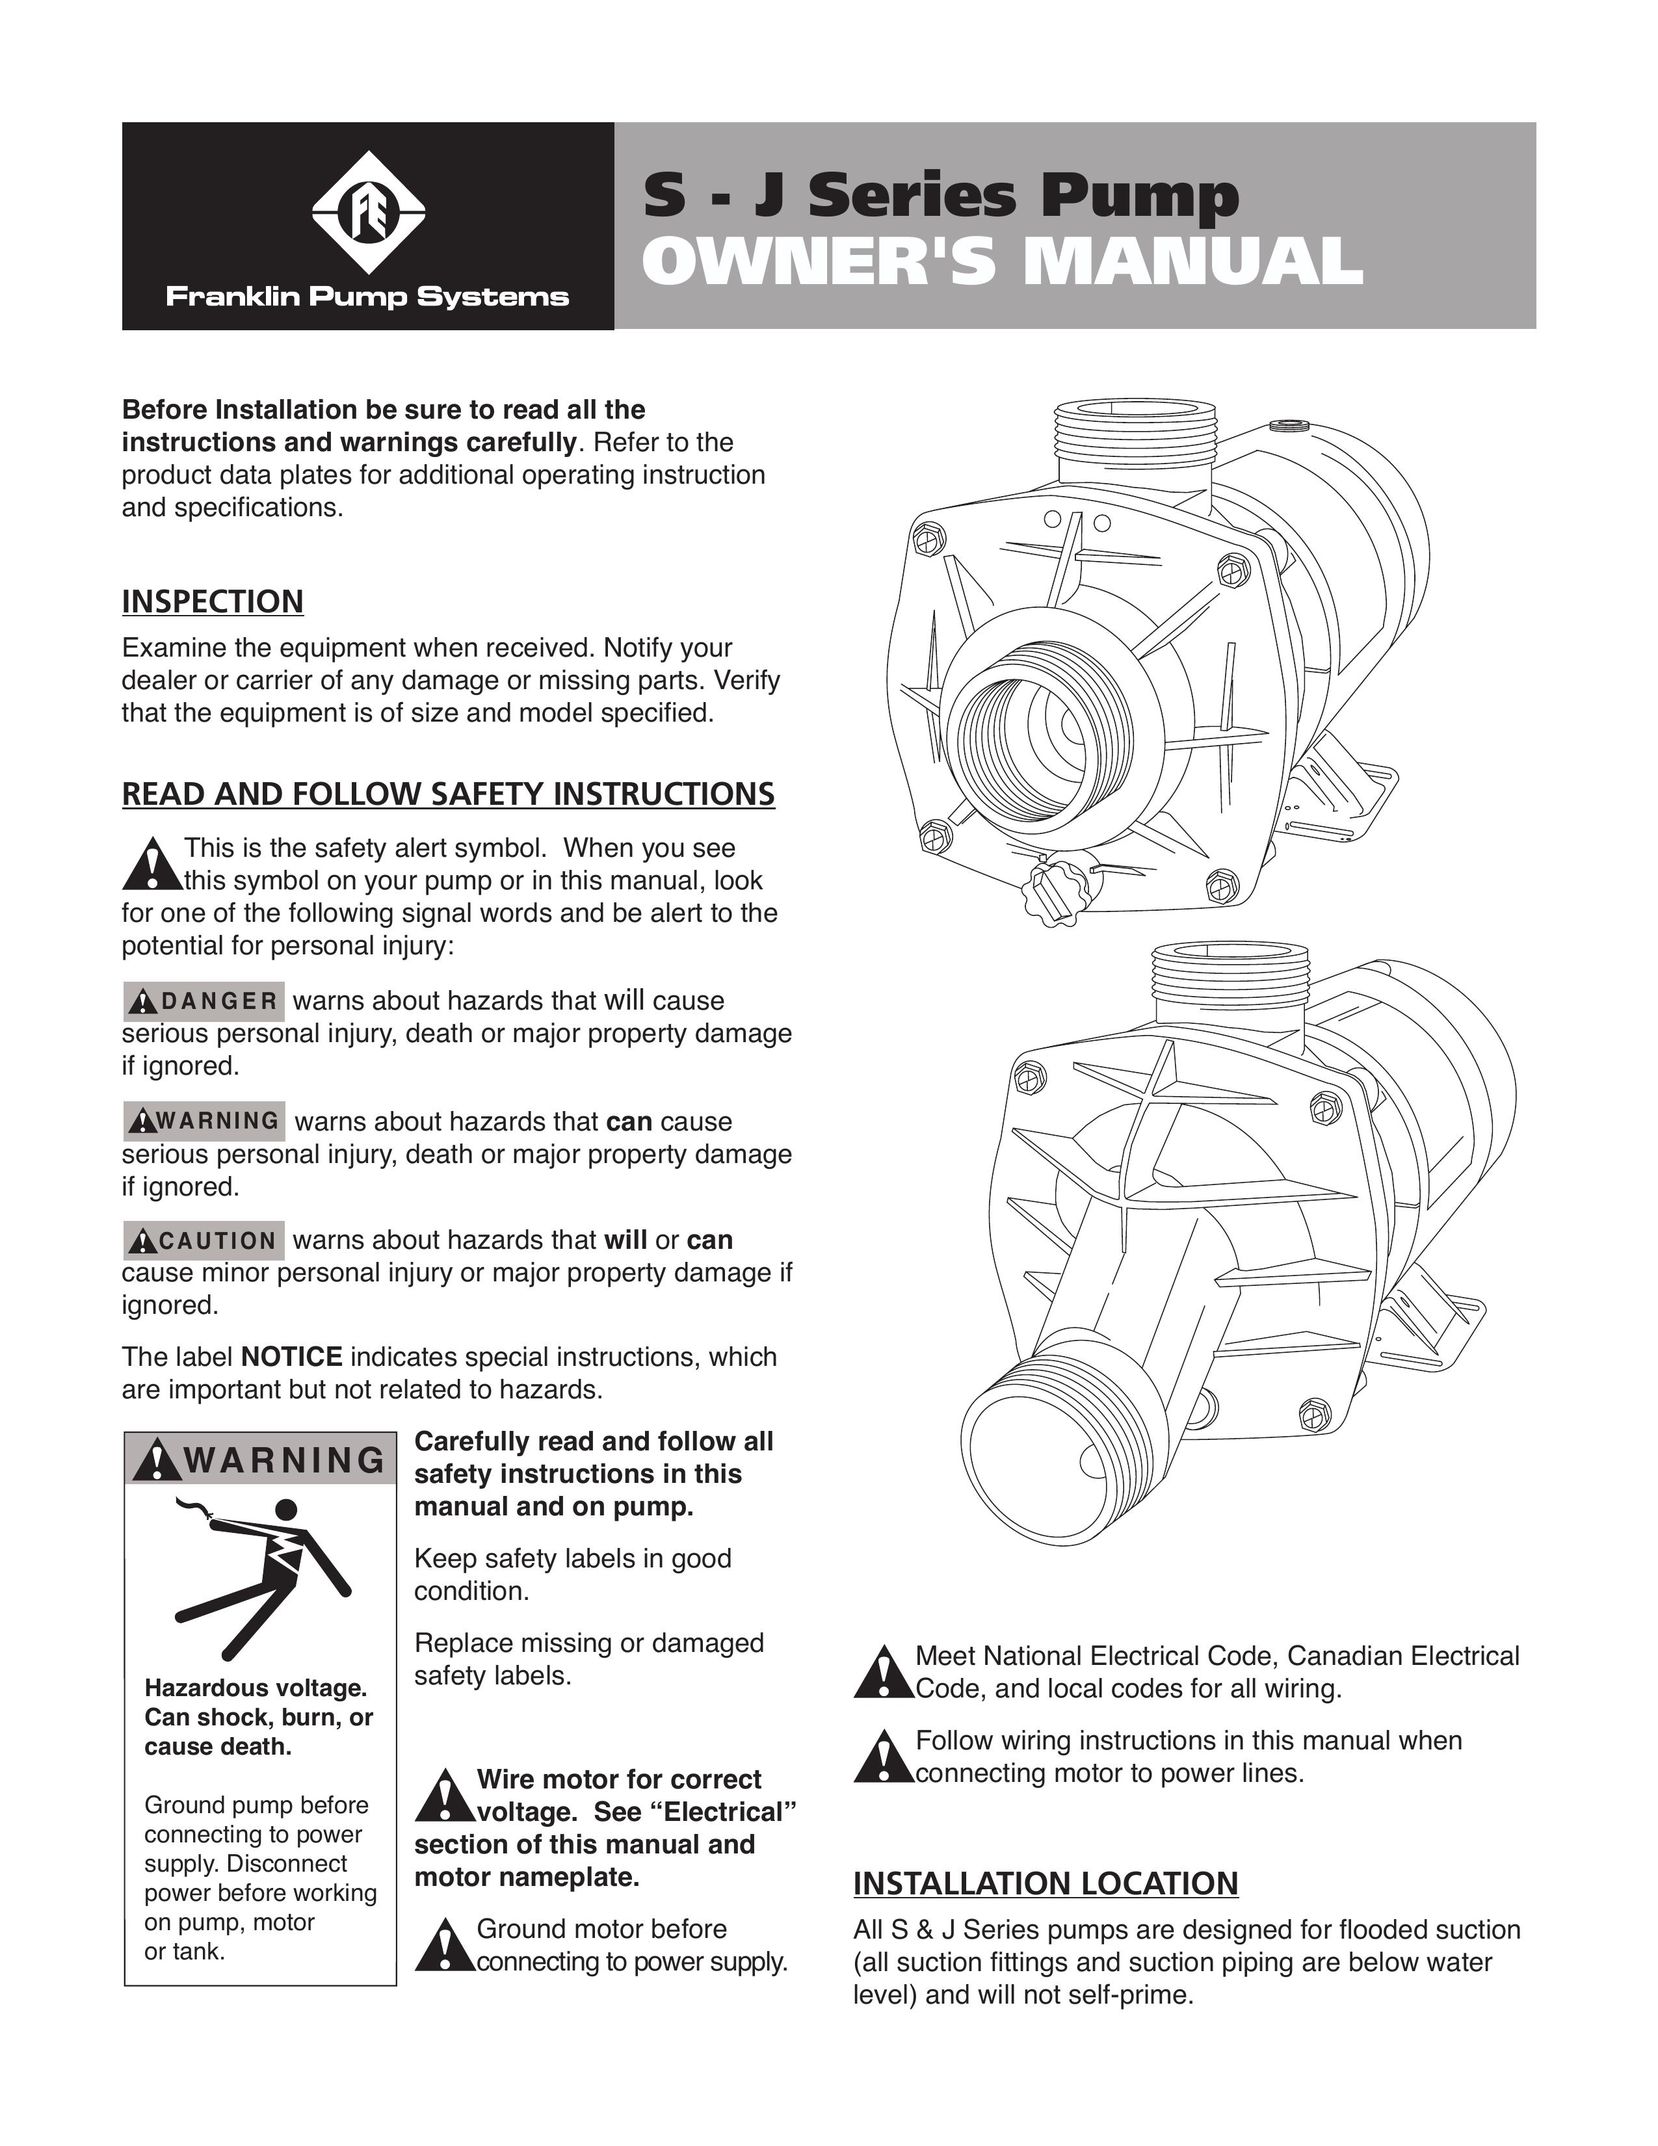 Franklin S - J Series Water Pump User Manual